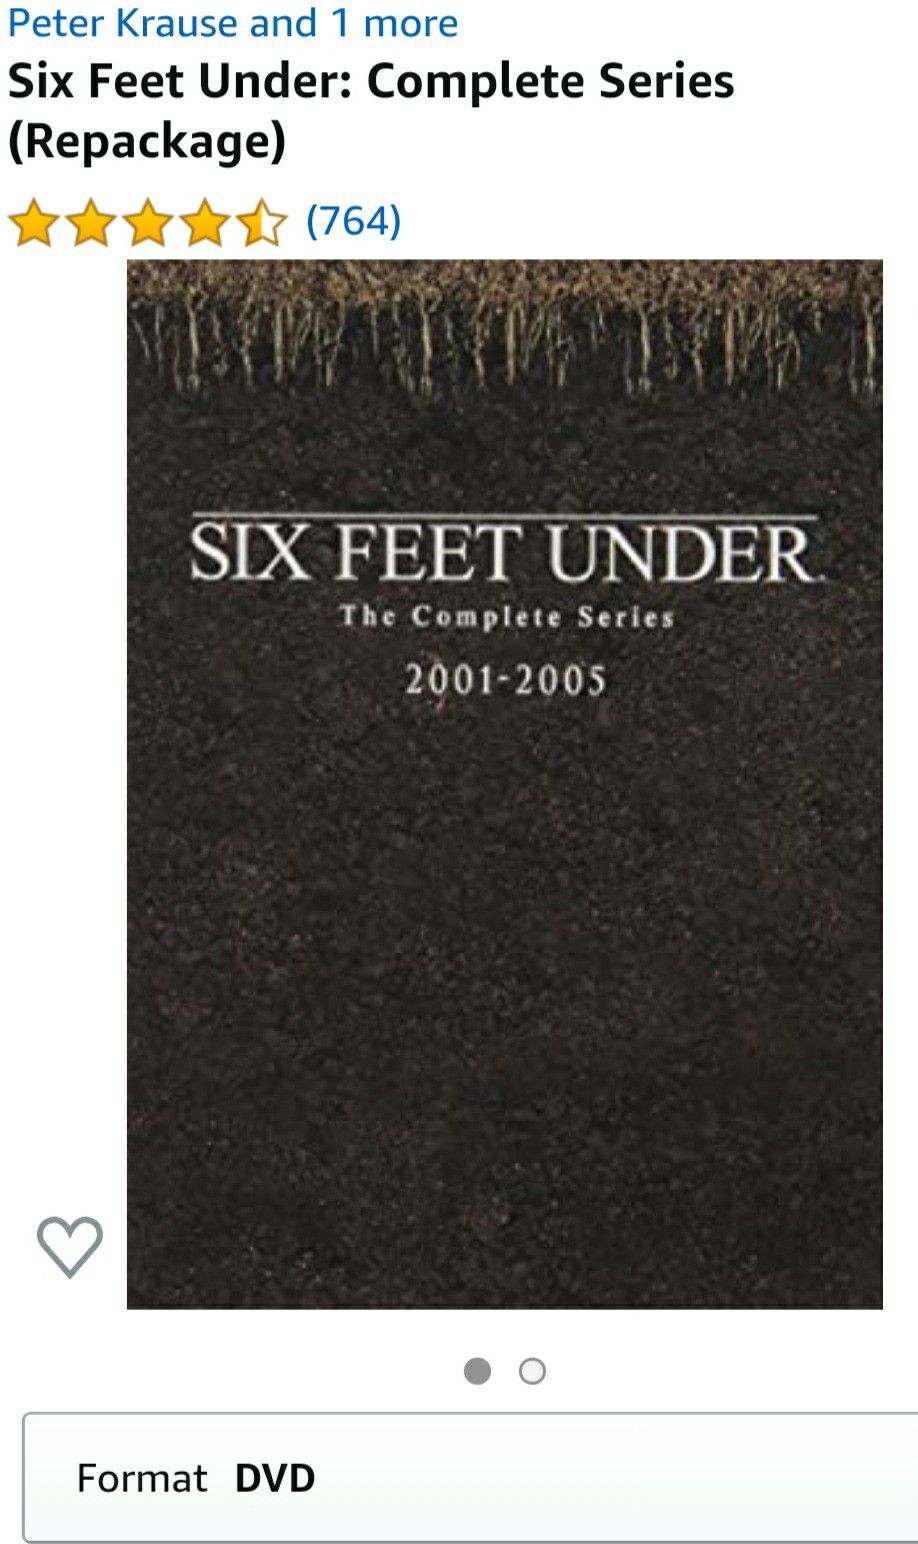 Six Feet Under - complete DVD series!